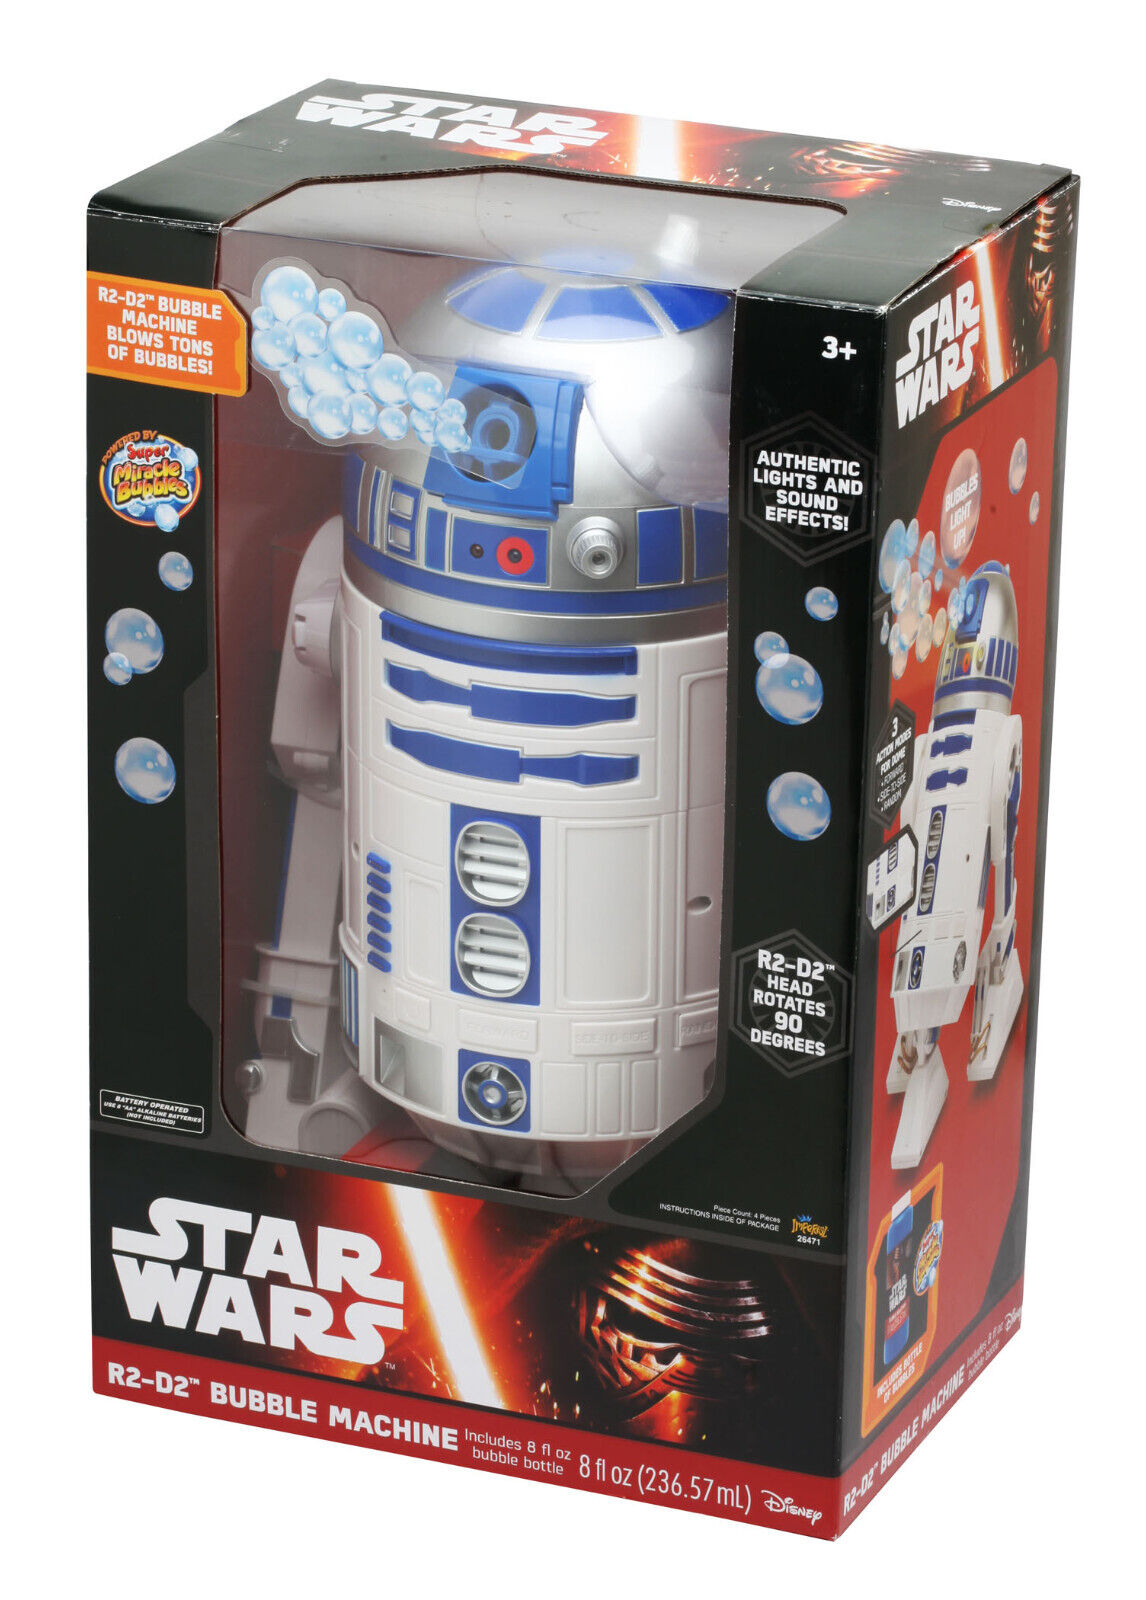 Star Wars R2-D2 Bubble Machine Disney Brand New Unopened With Sound